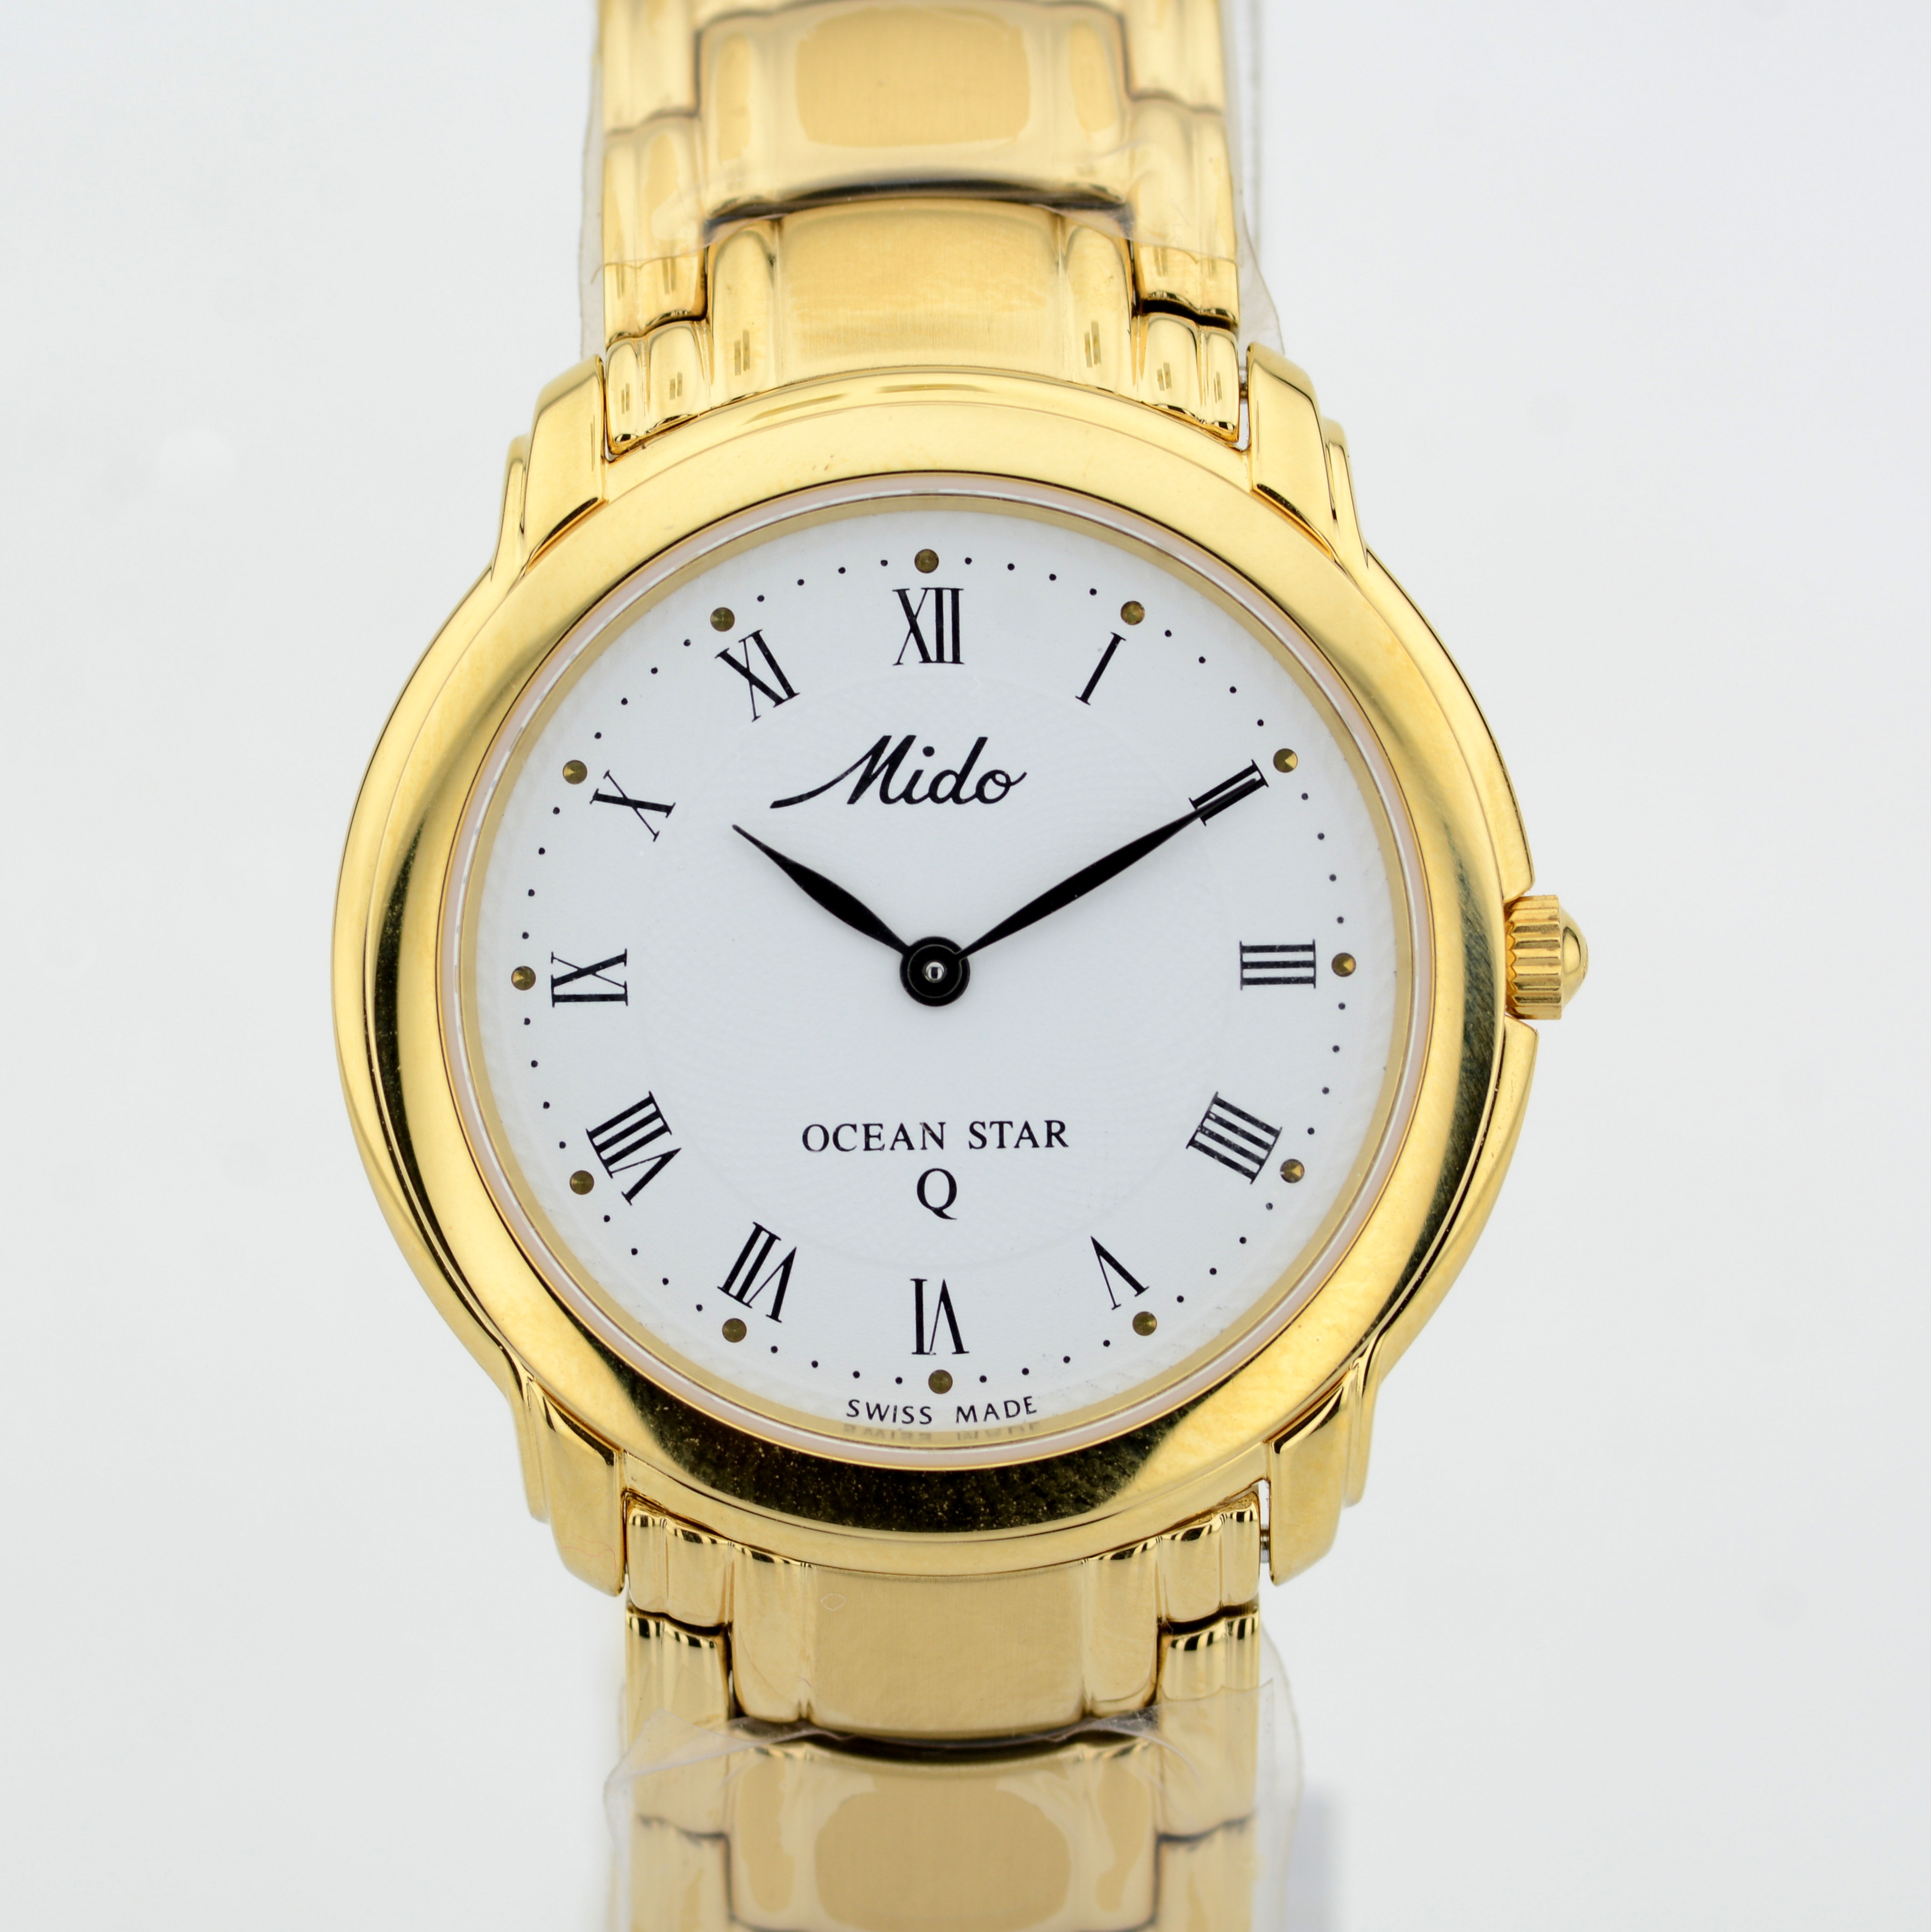 Mido / Ocean Star Automatic - (Unworn) Gentlmen's Gold-plated Wrist Watch - Image 3 of 7